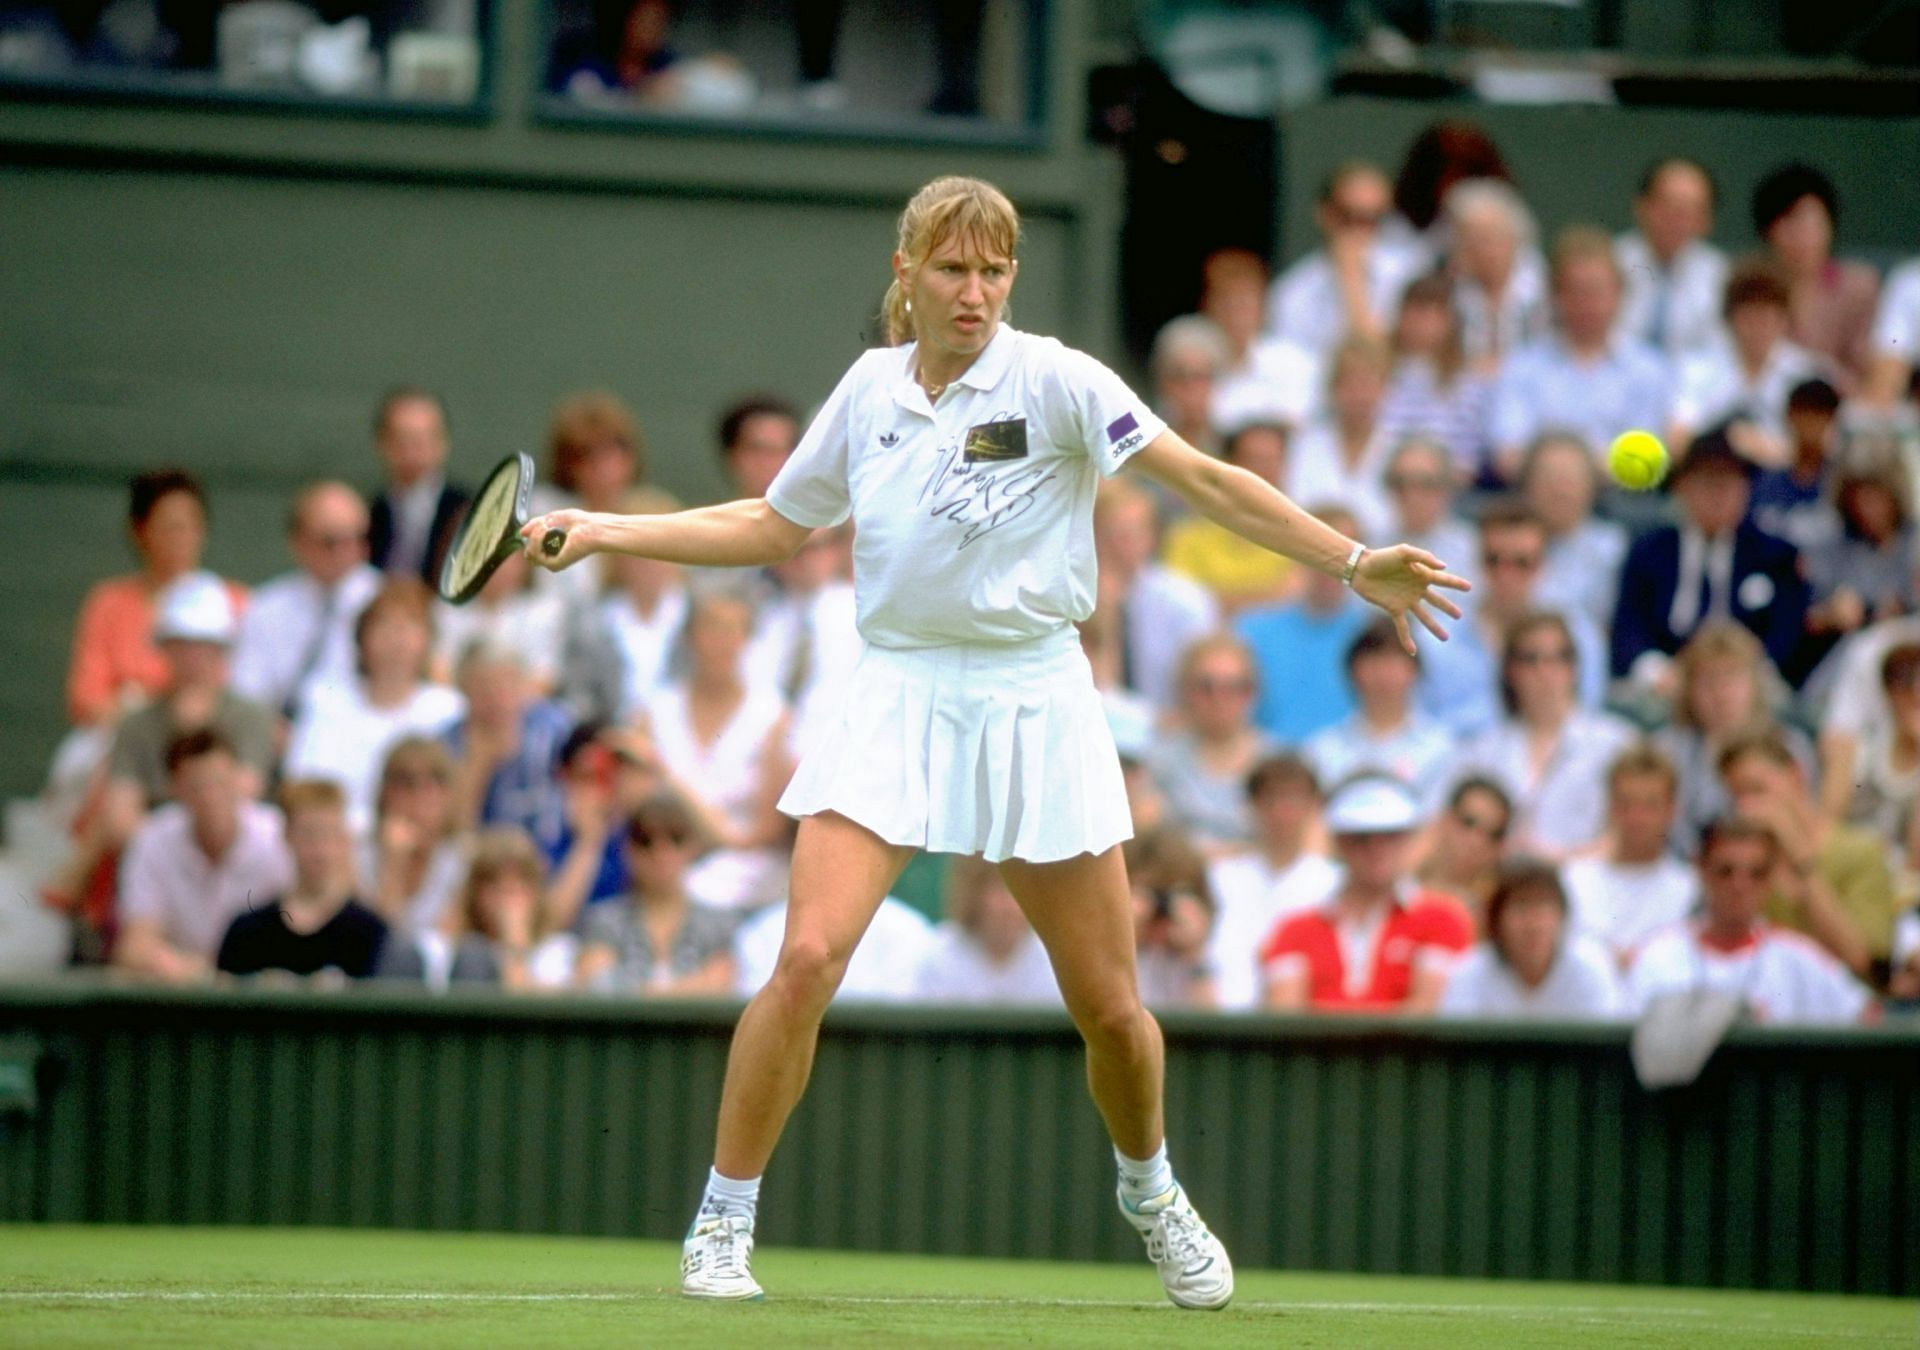 Steffi Graf at the 1990 Wimbledon Championships